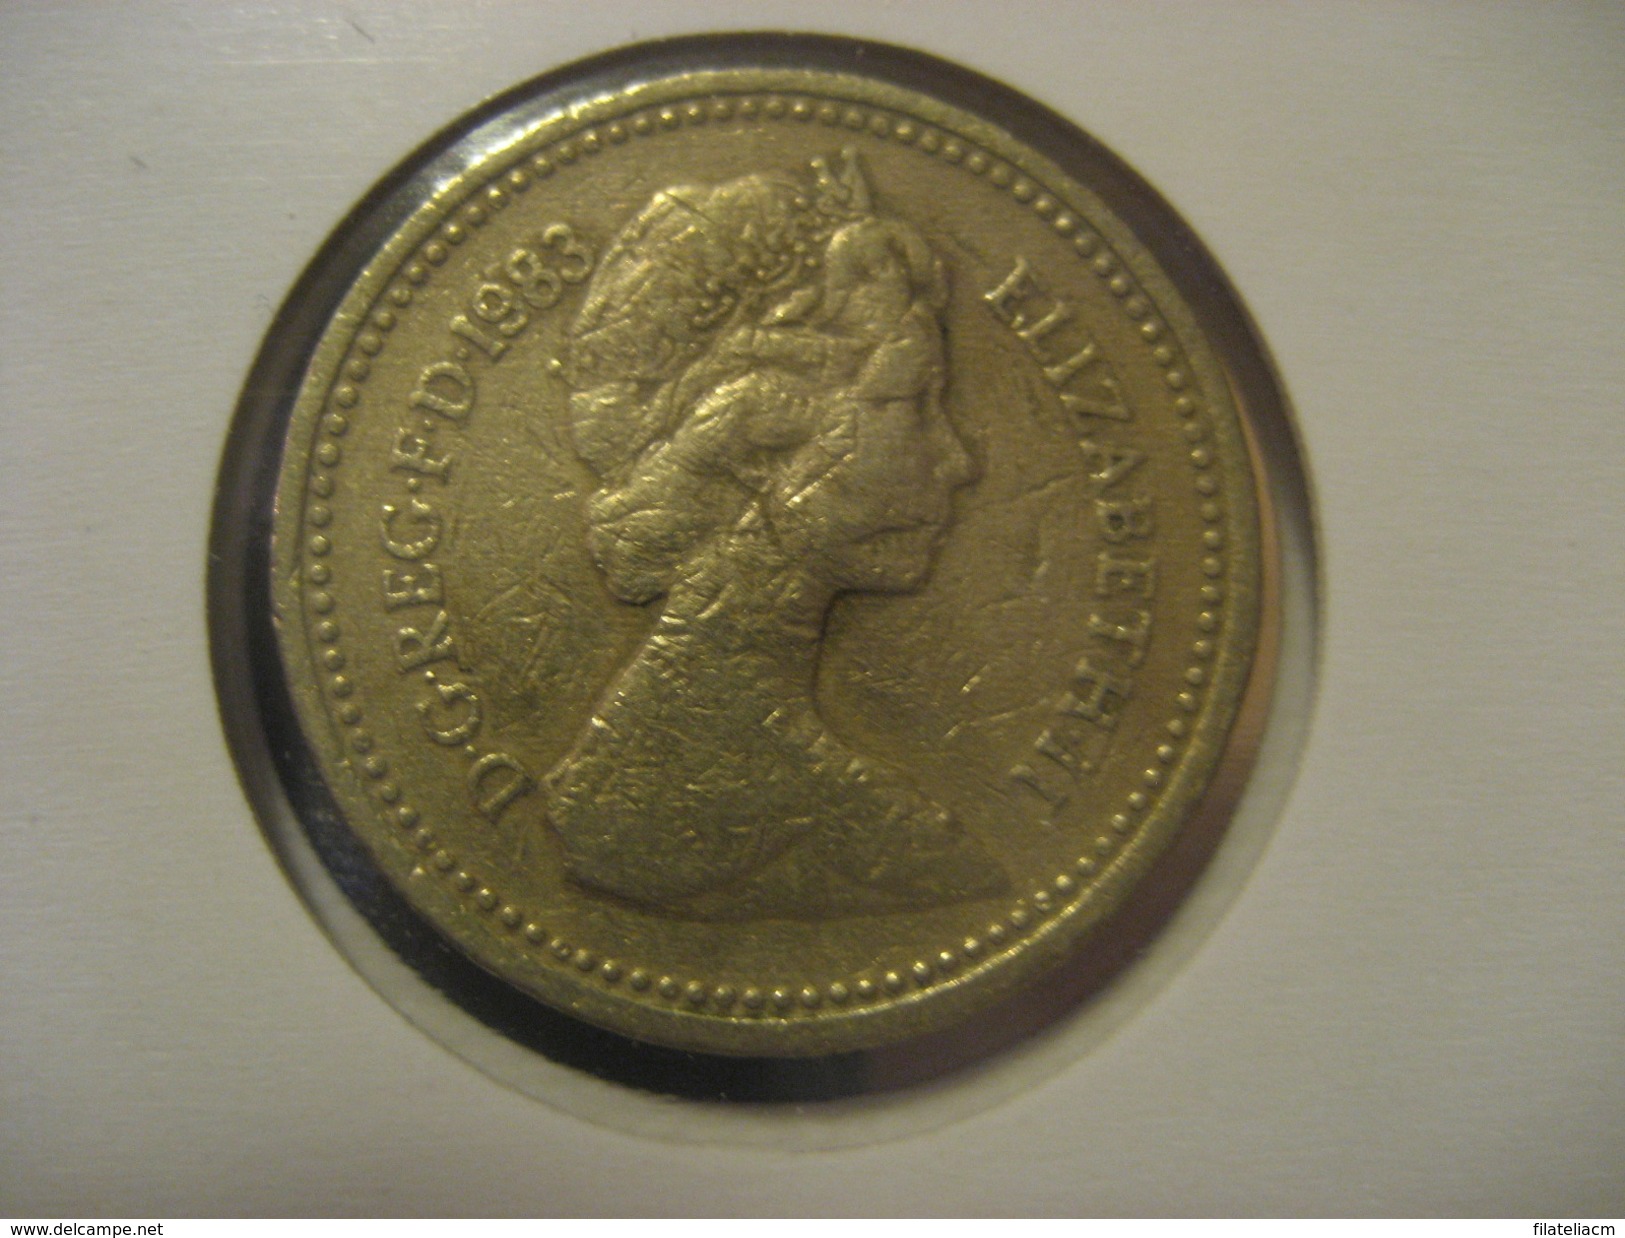 1 Pound 1983 ENGLAND Great Britain QE II Coin - 1 Pound